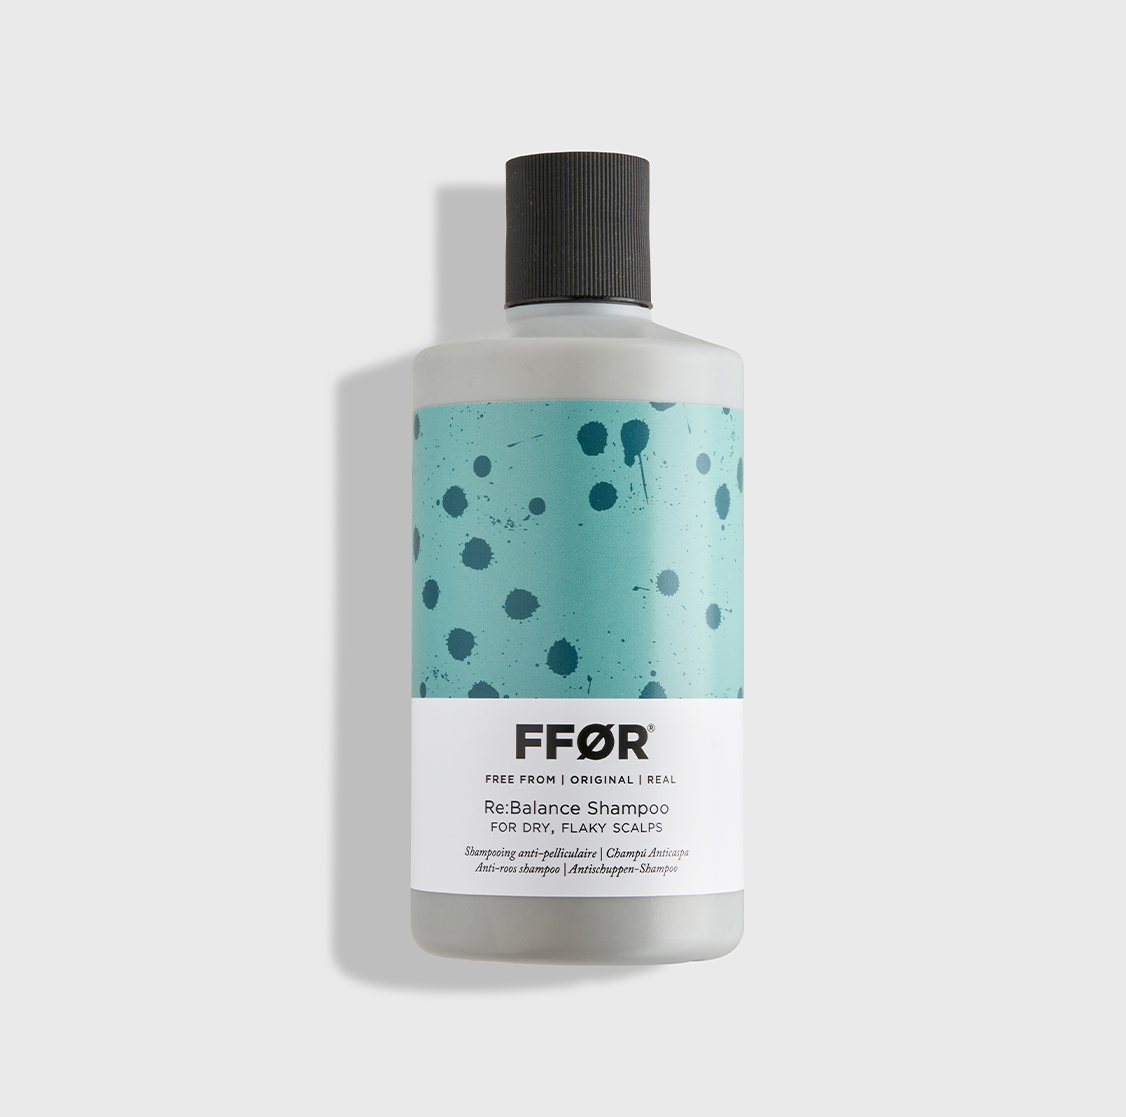 FFOR Hair purify acv cleanse clarifying shampoo bottle image on plain backdrop